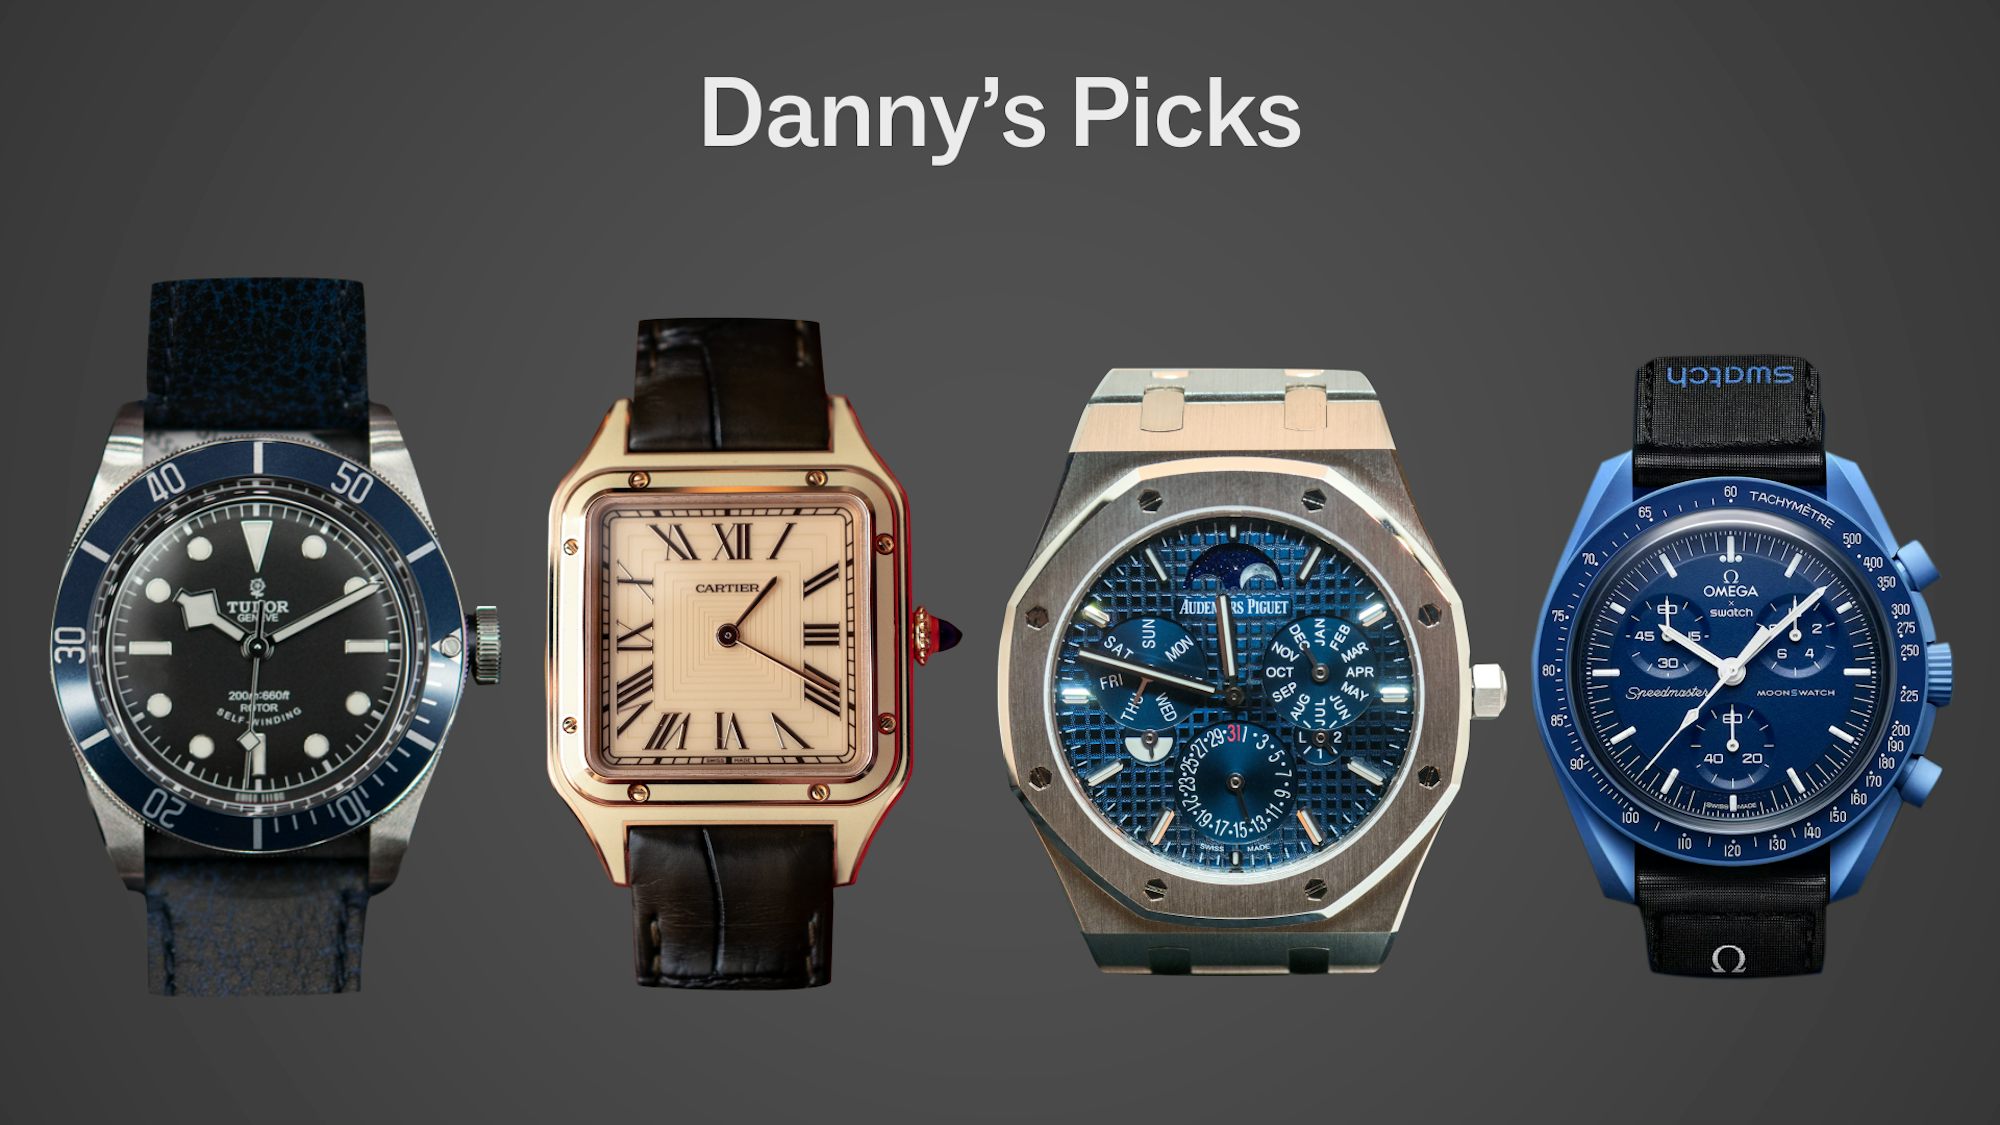 hodinkee editor favorite watches of 21st century